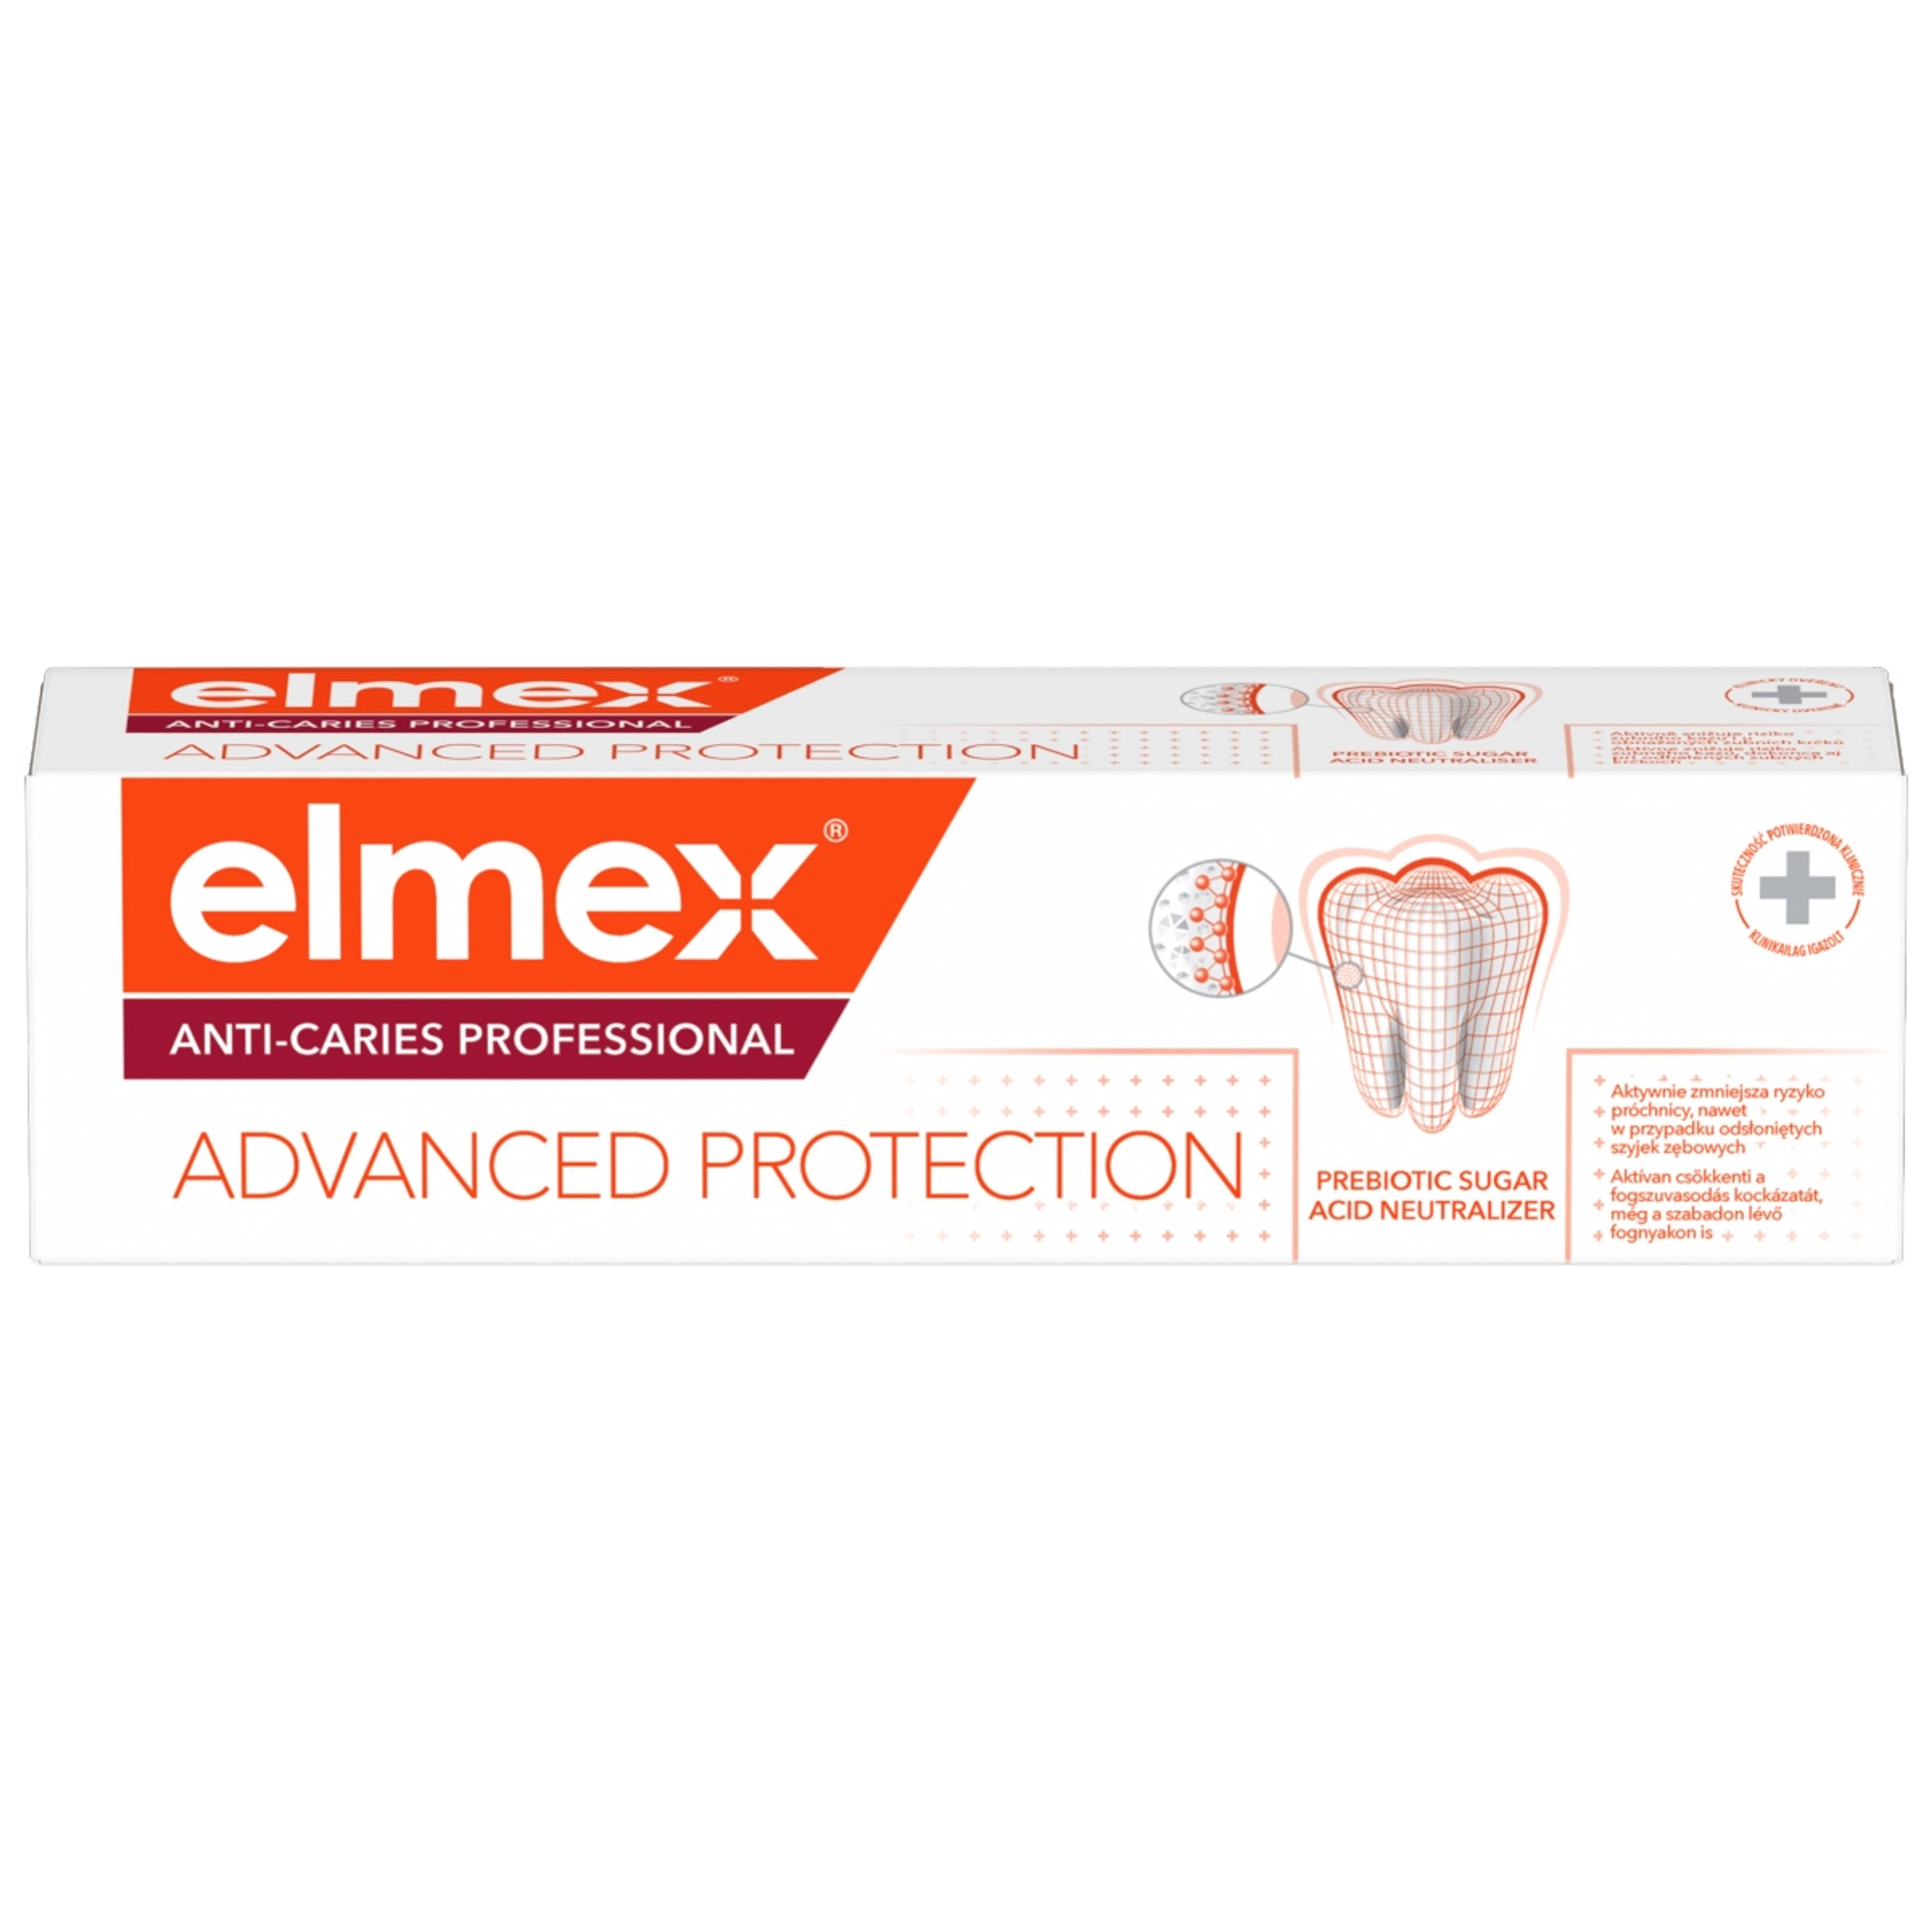 Elmex Anti-Caries Protection Professional fogkrém fogkrém - 75 ml-1